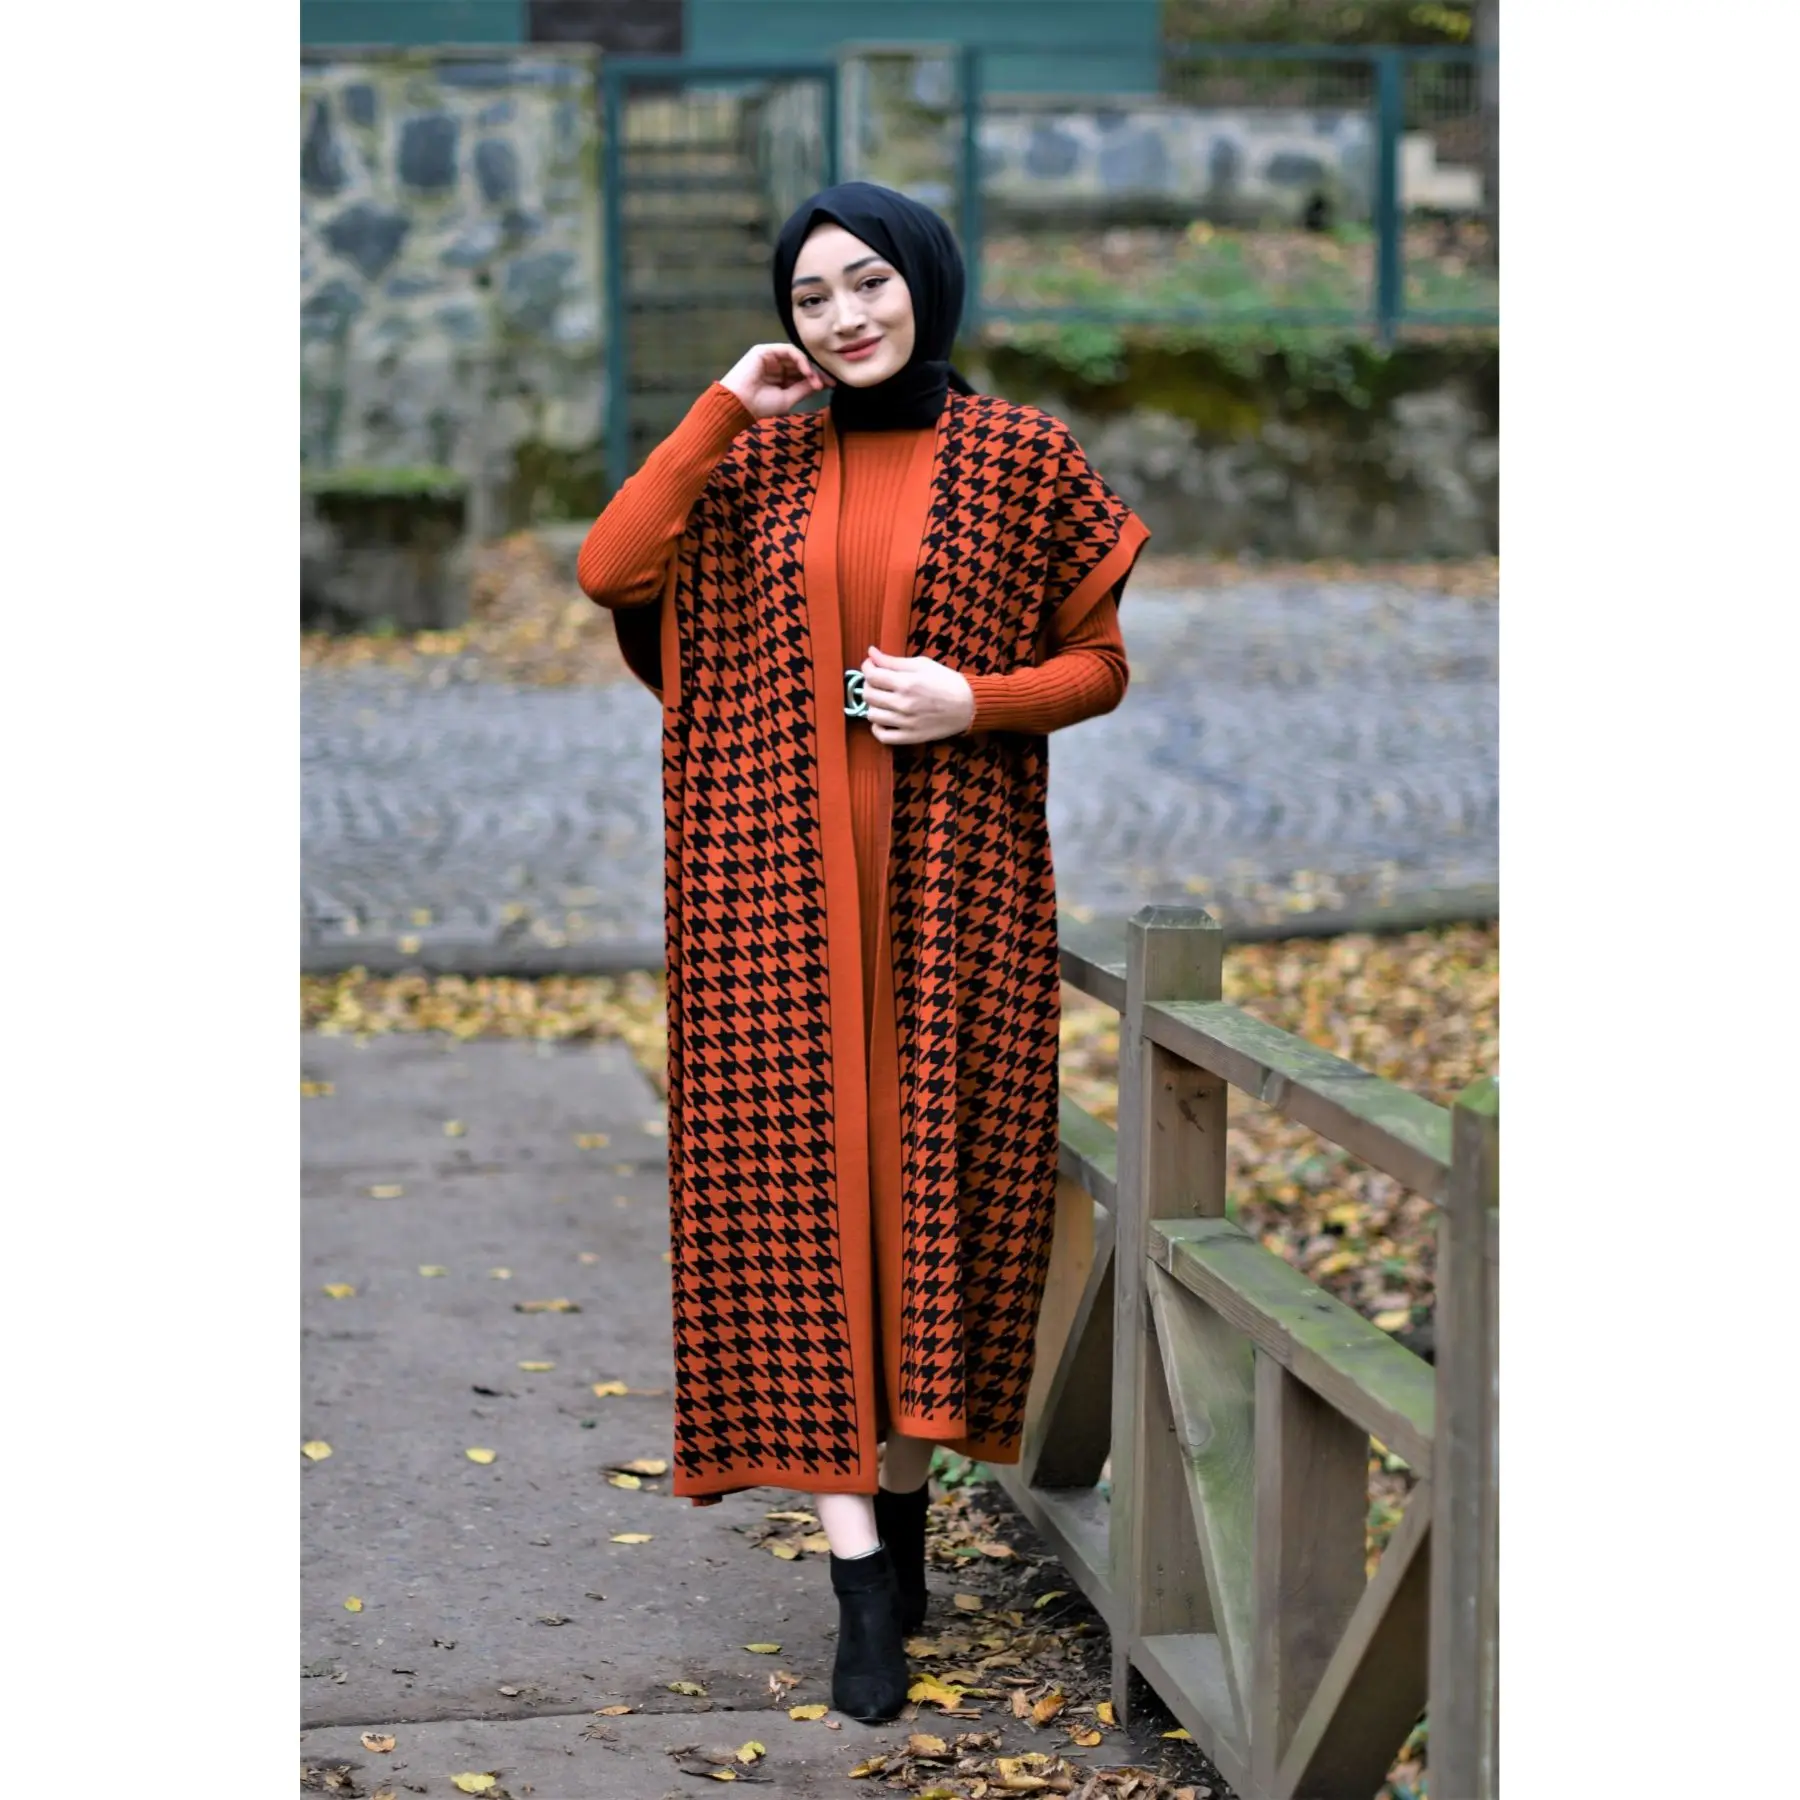 2 Piece Women's Set Crowbar Patterned Knitwear Maxi Turtleneck Dress and Cardigan Long Sleeve Turkey Muslim Fashion Dubai |